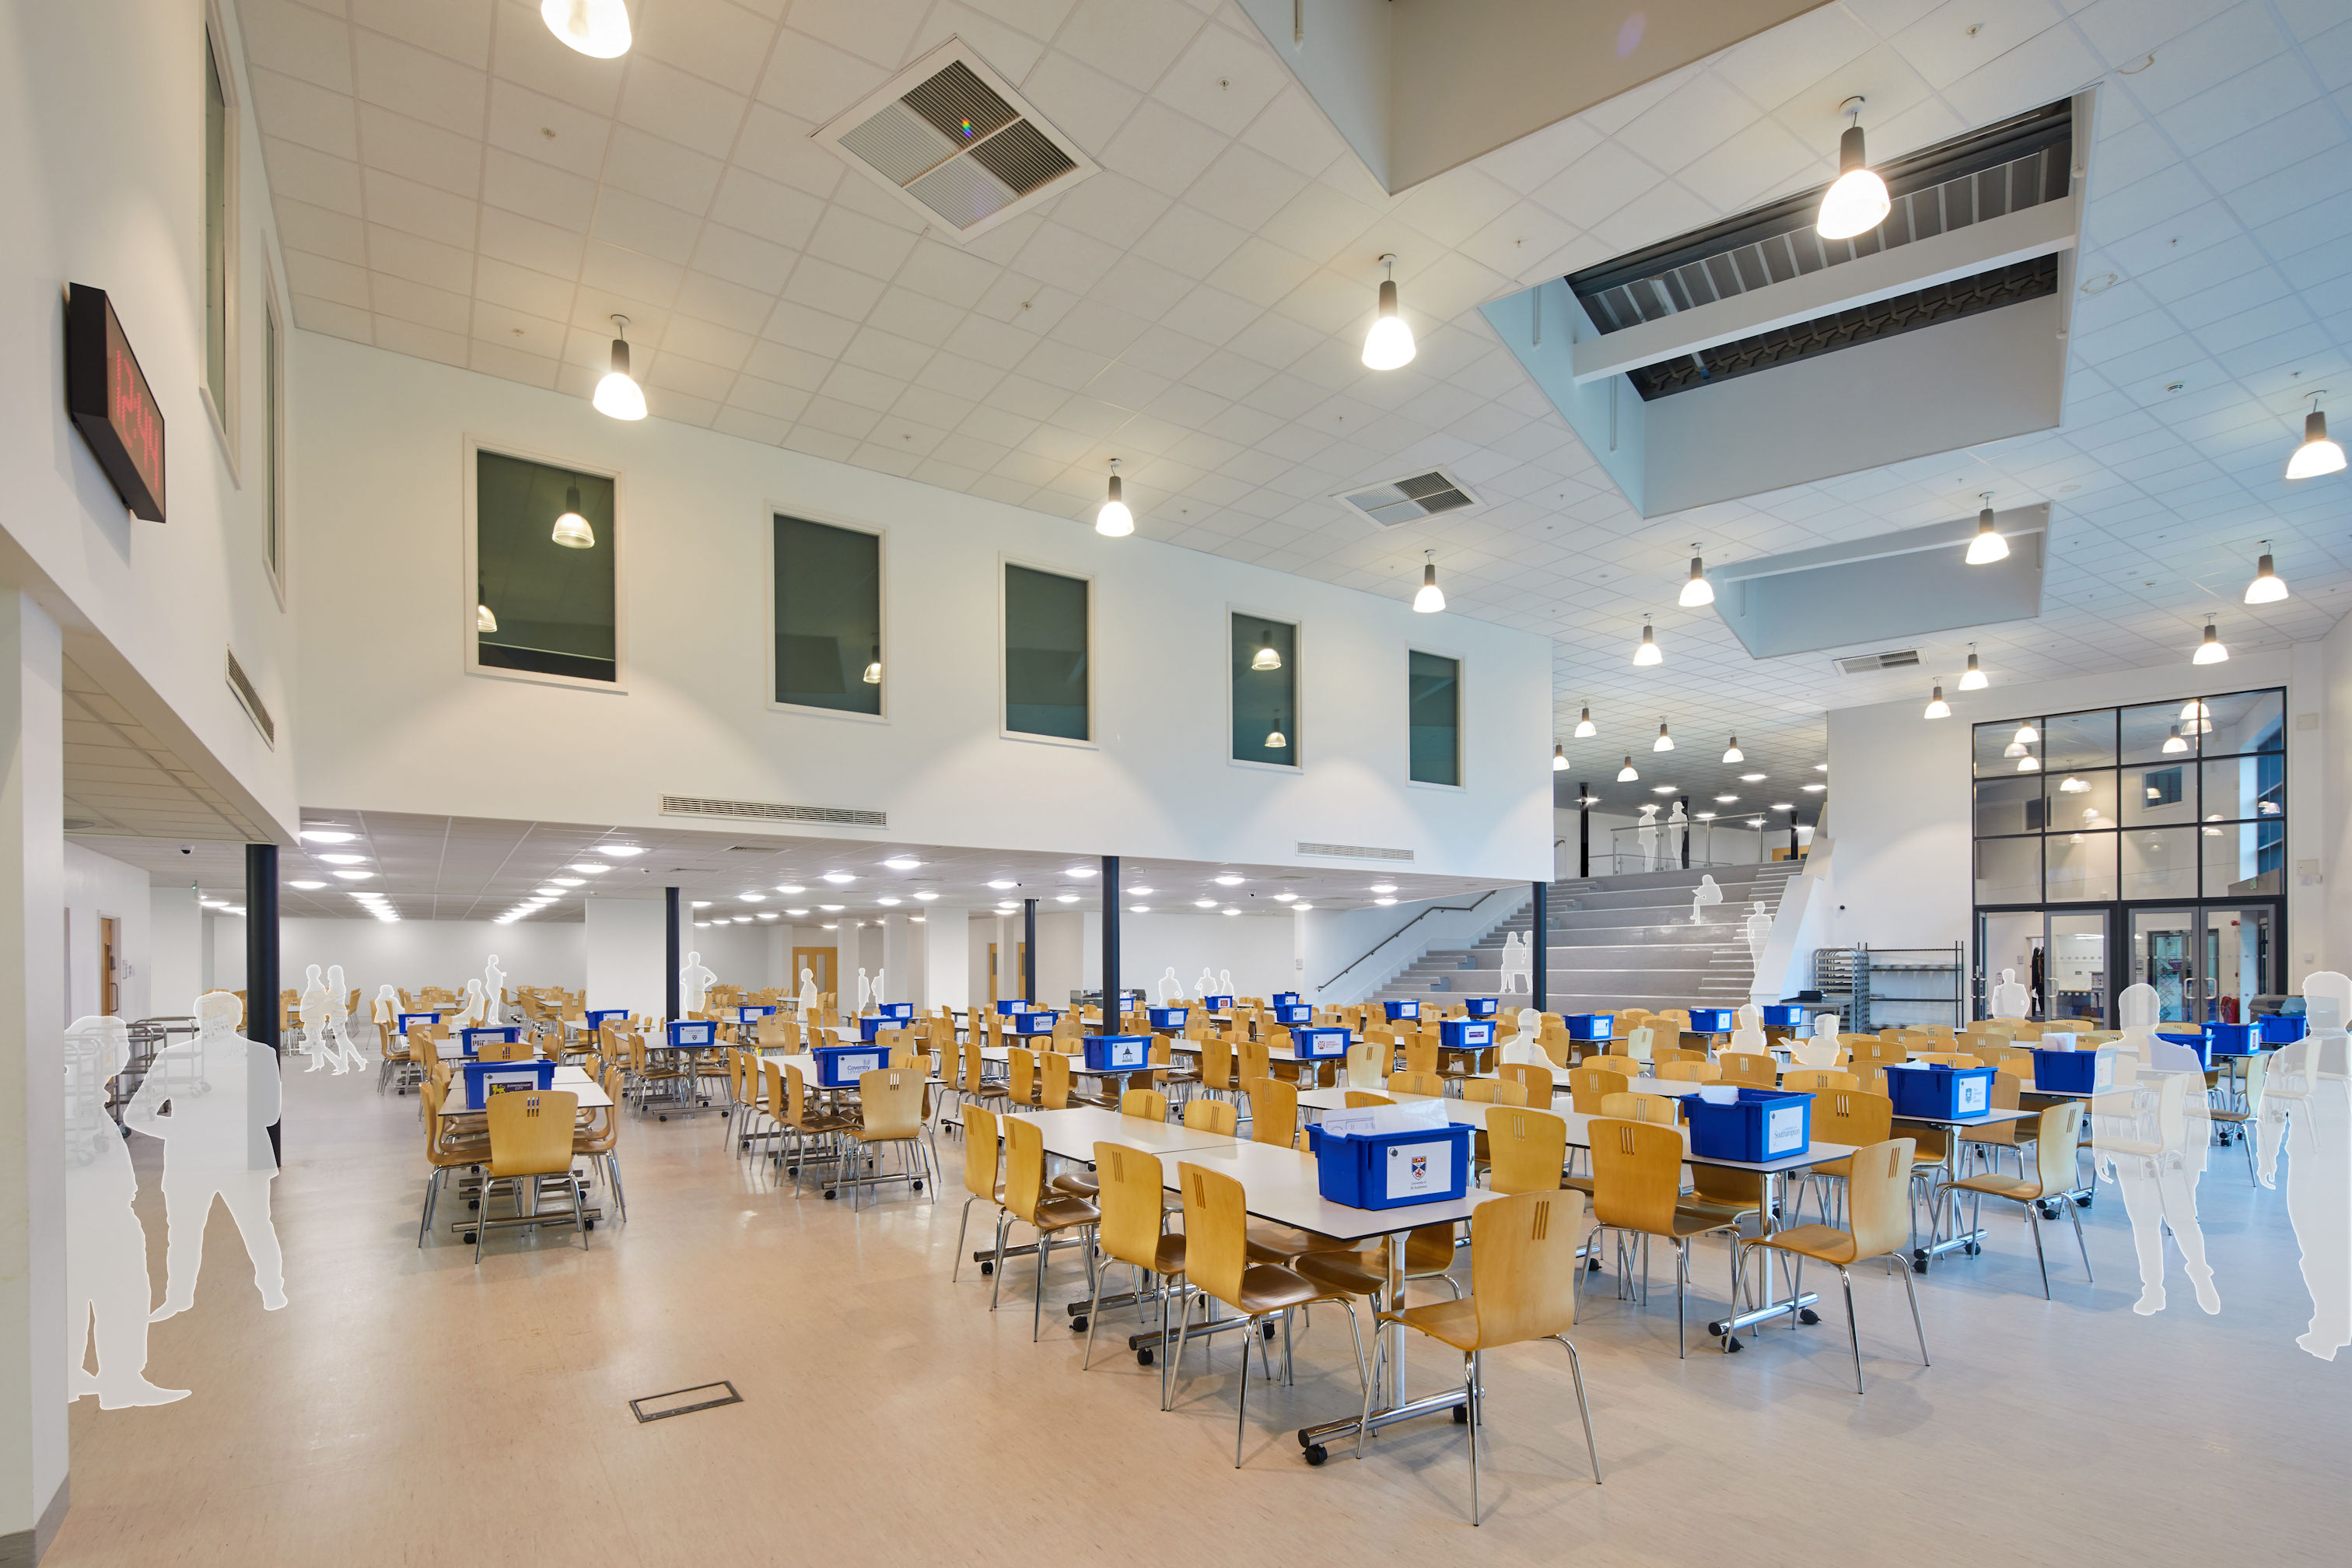 Sandwell Schools - Q3 Academy - Dining Room mid.jpg